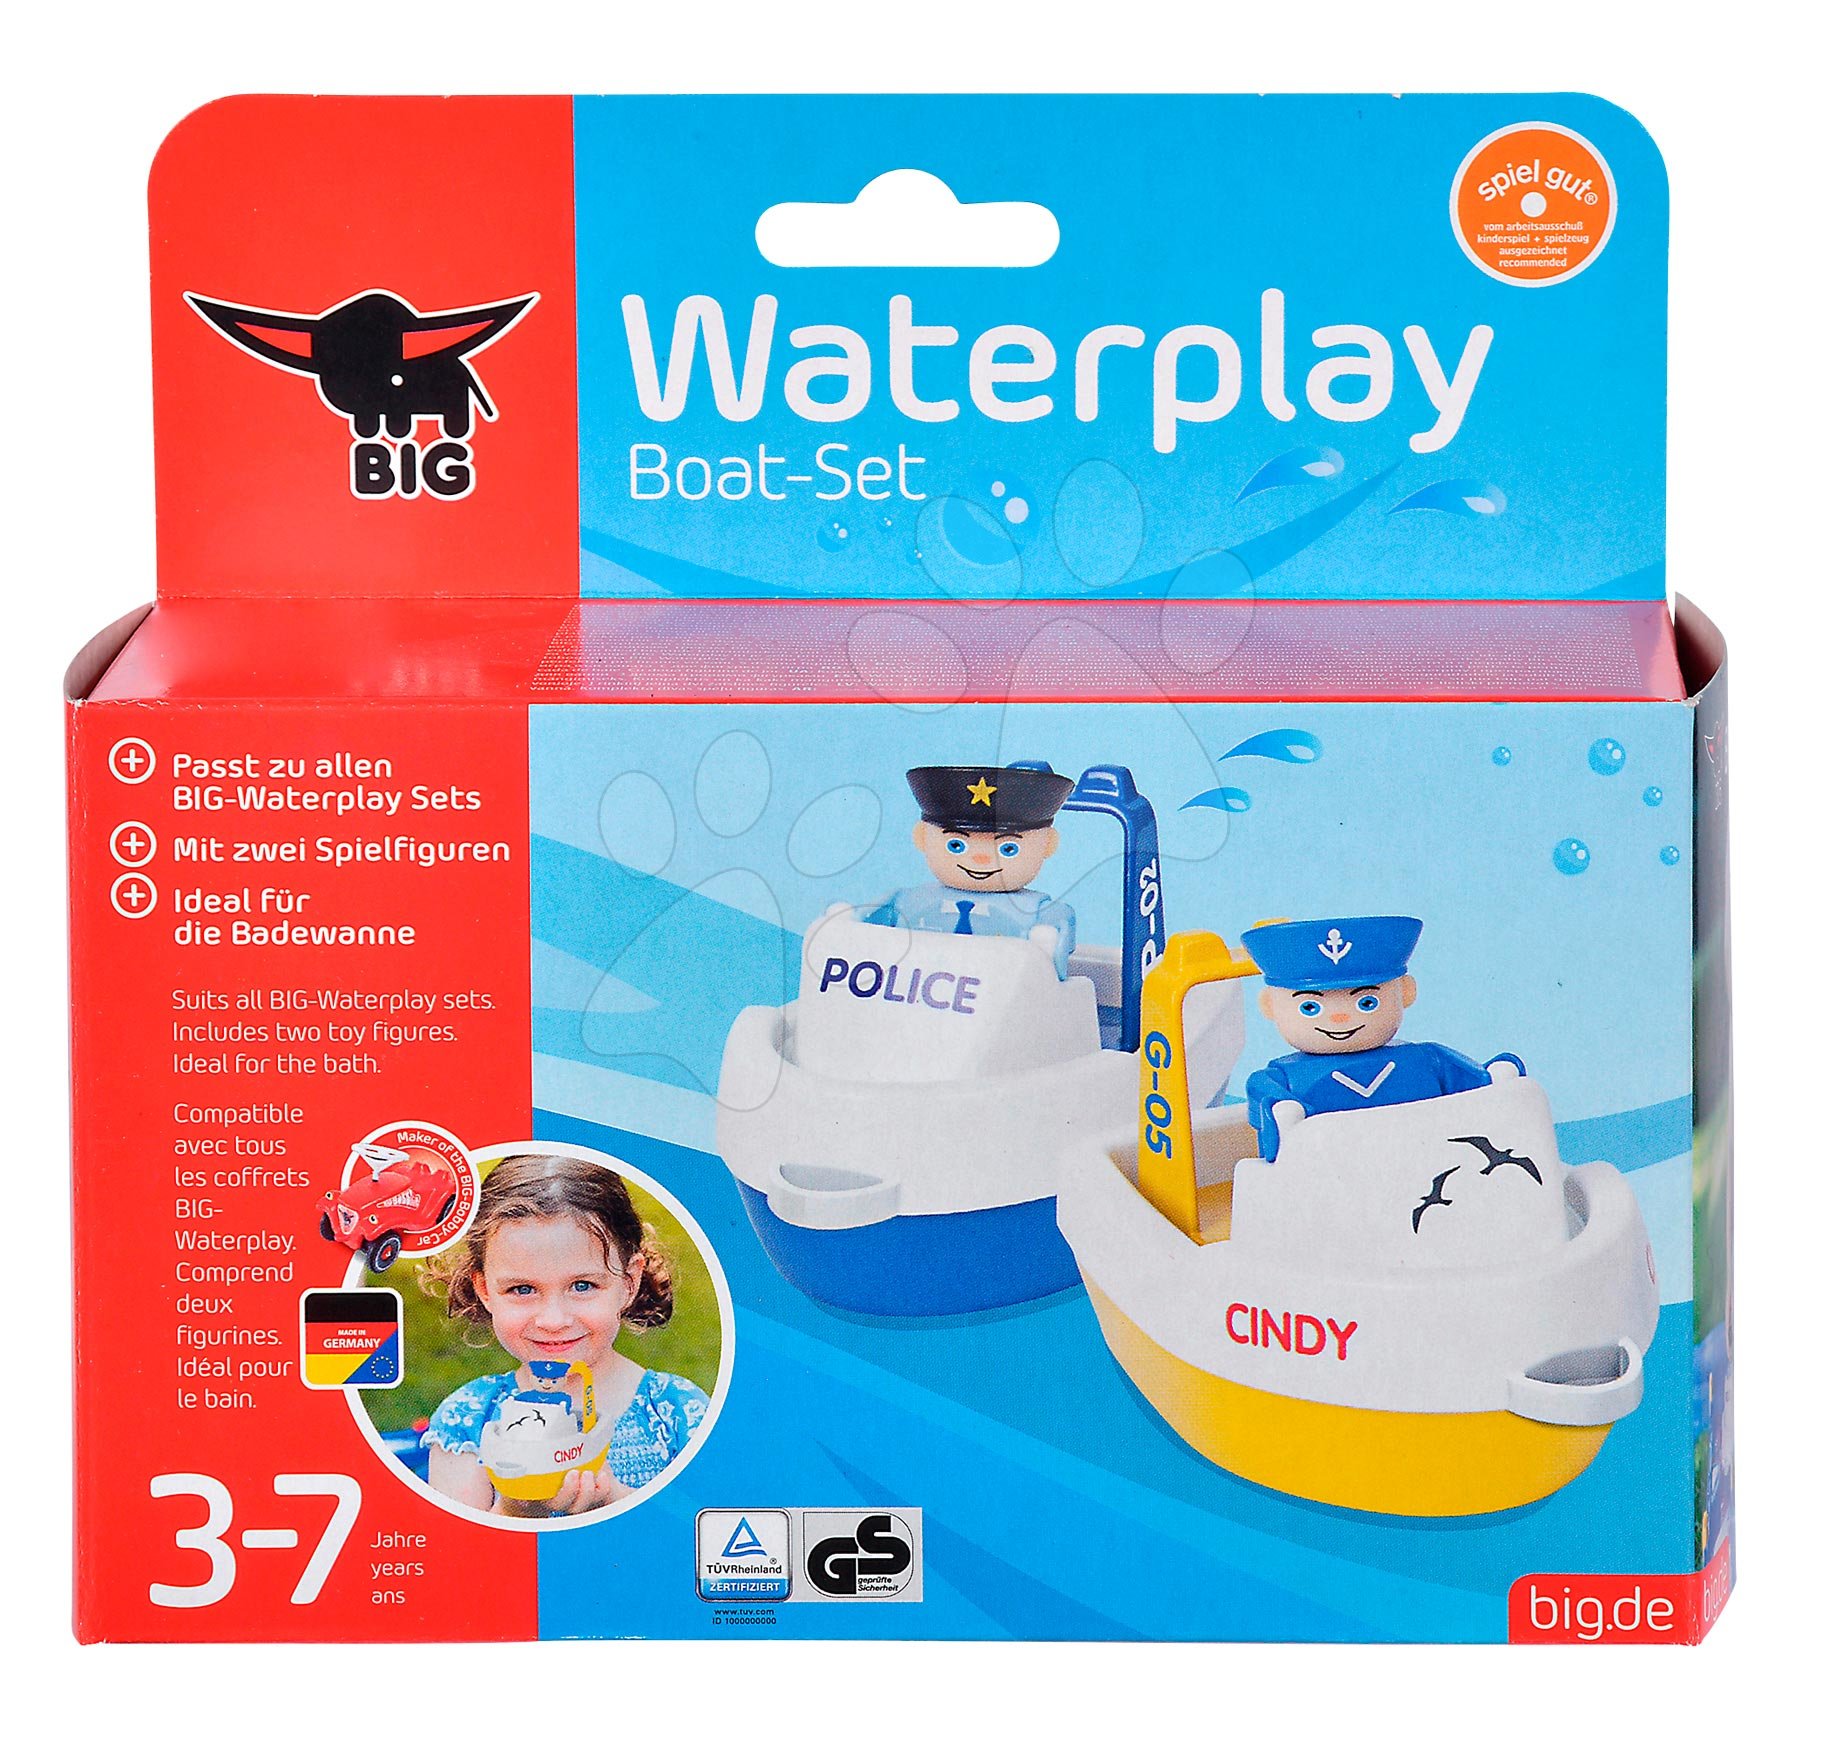 Big Waterplay Boat-Set 800055106 